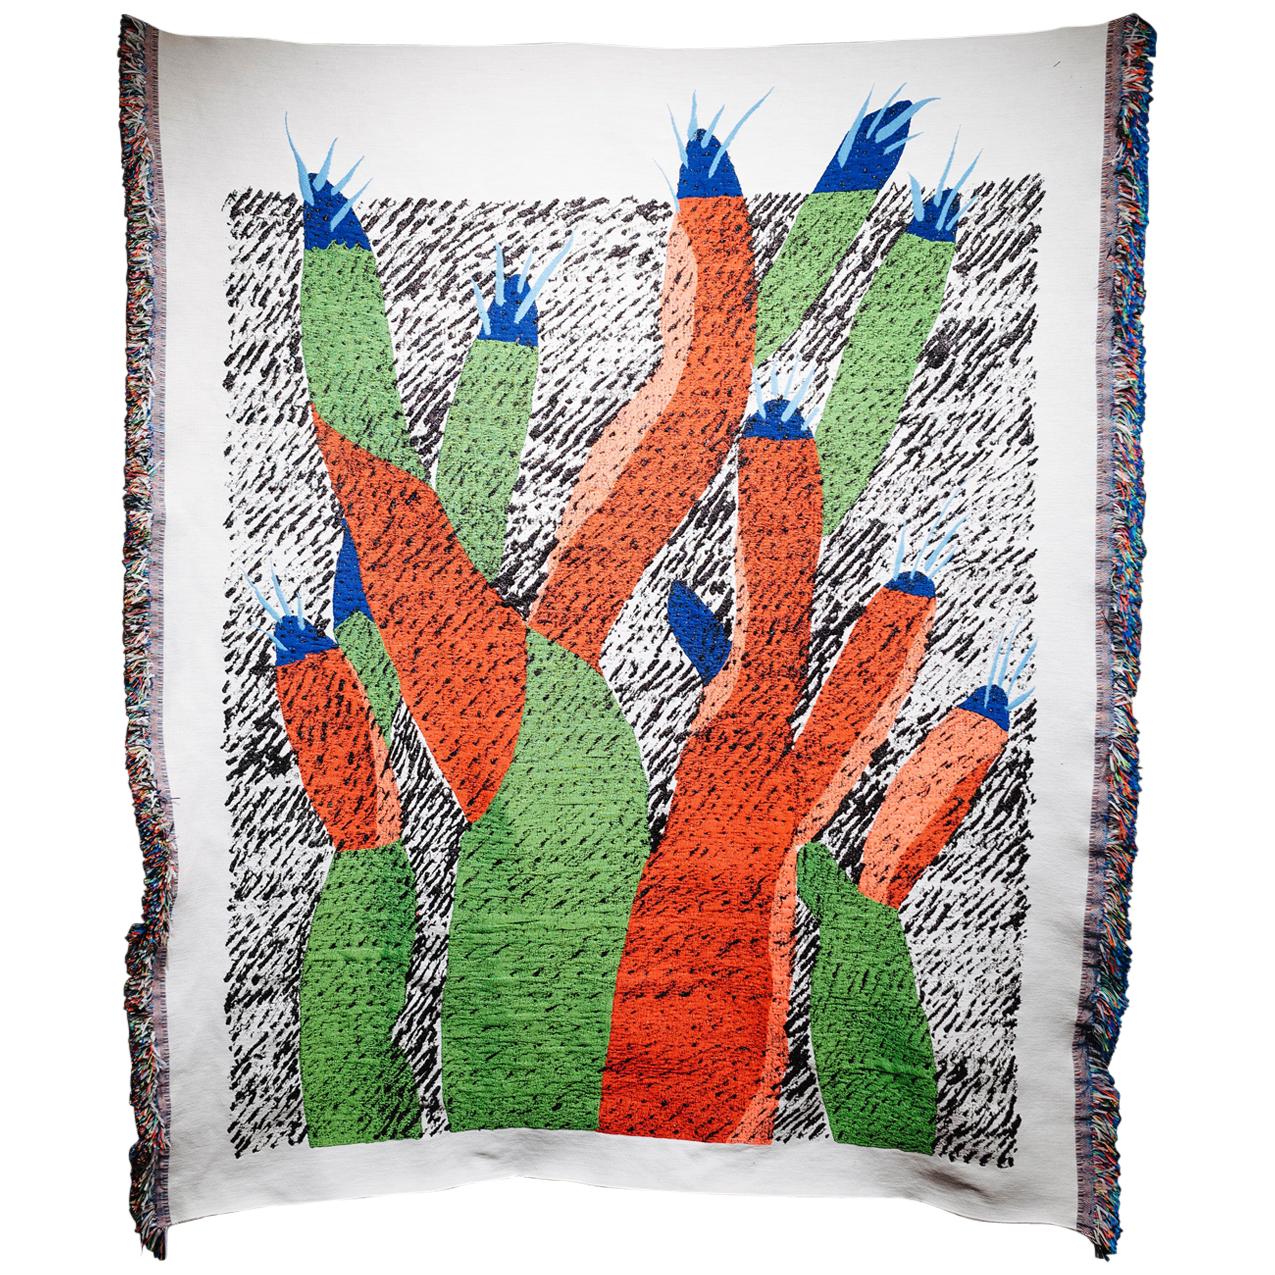 Ugo La Pietra Artificial Nature #2 Wandteppich aus recycelten Fasern